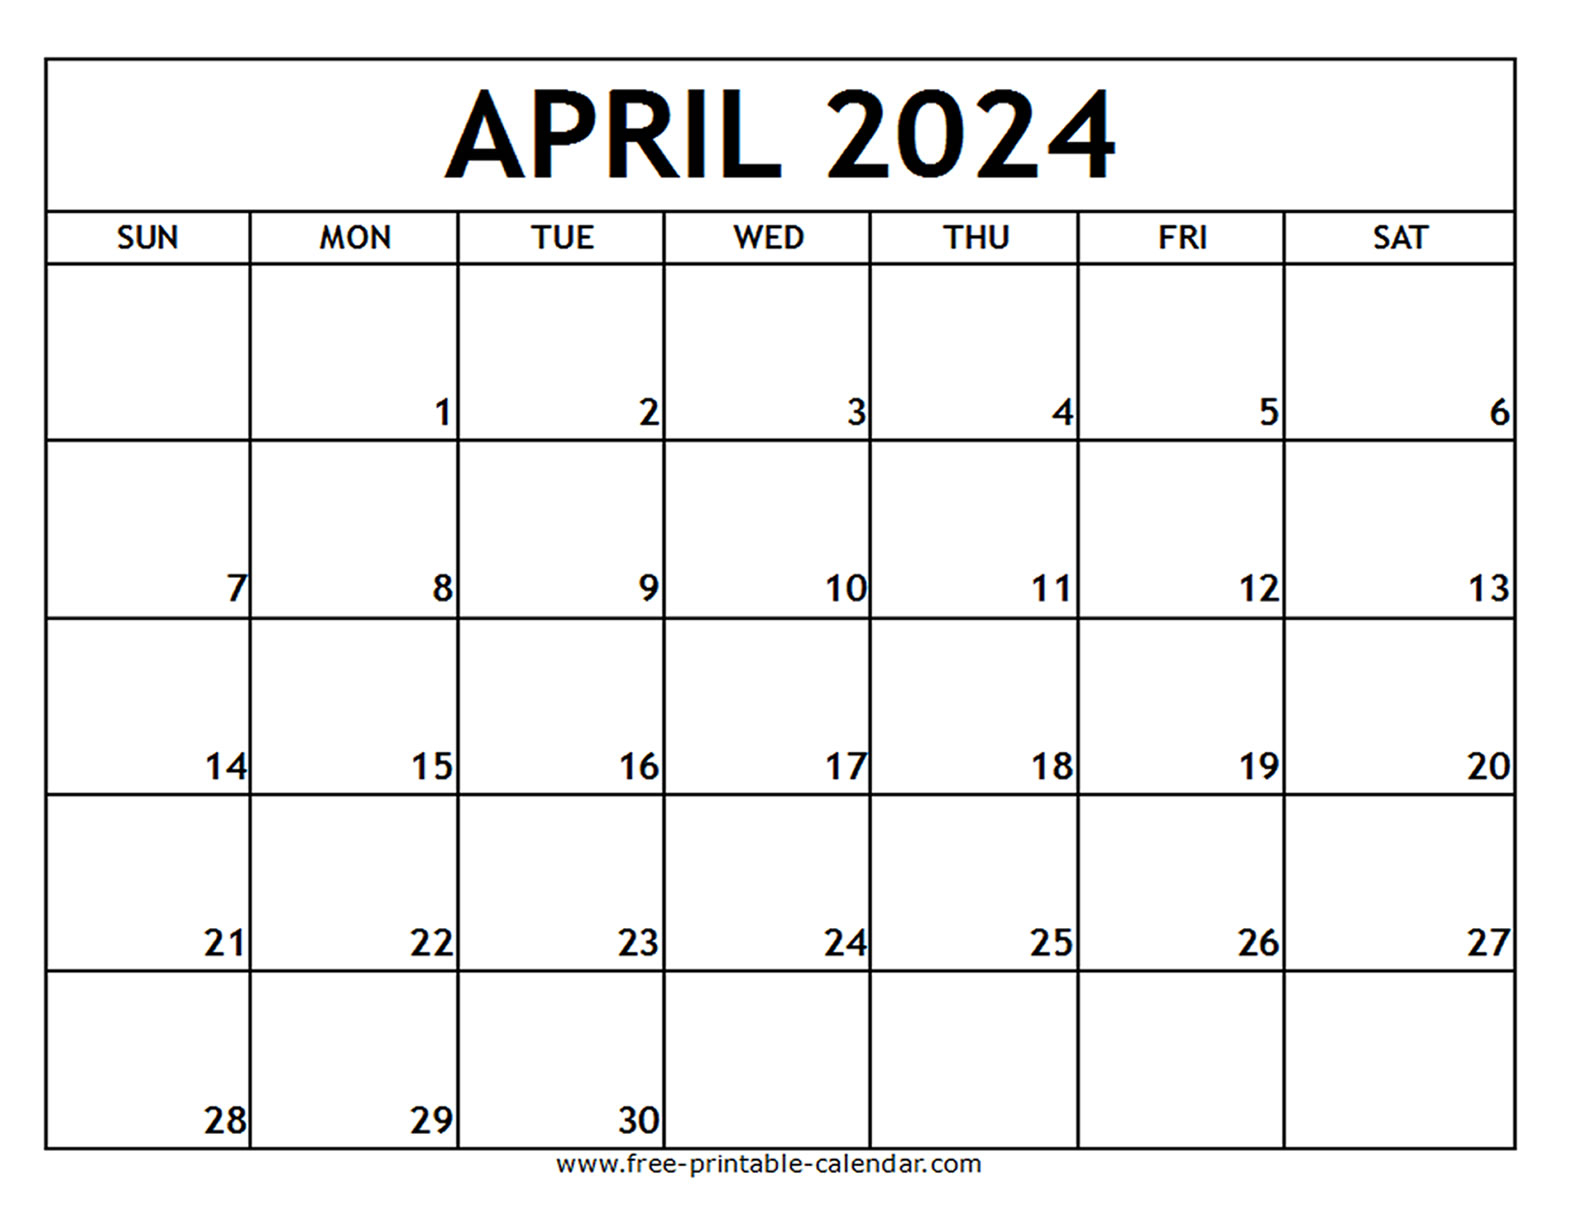 April 2024 Printable Calendar - Free-Printable-Calendar throughout Free Editable Calendar April 2024